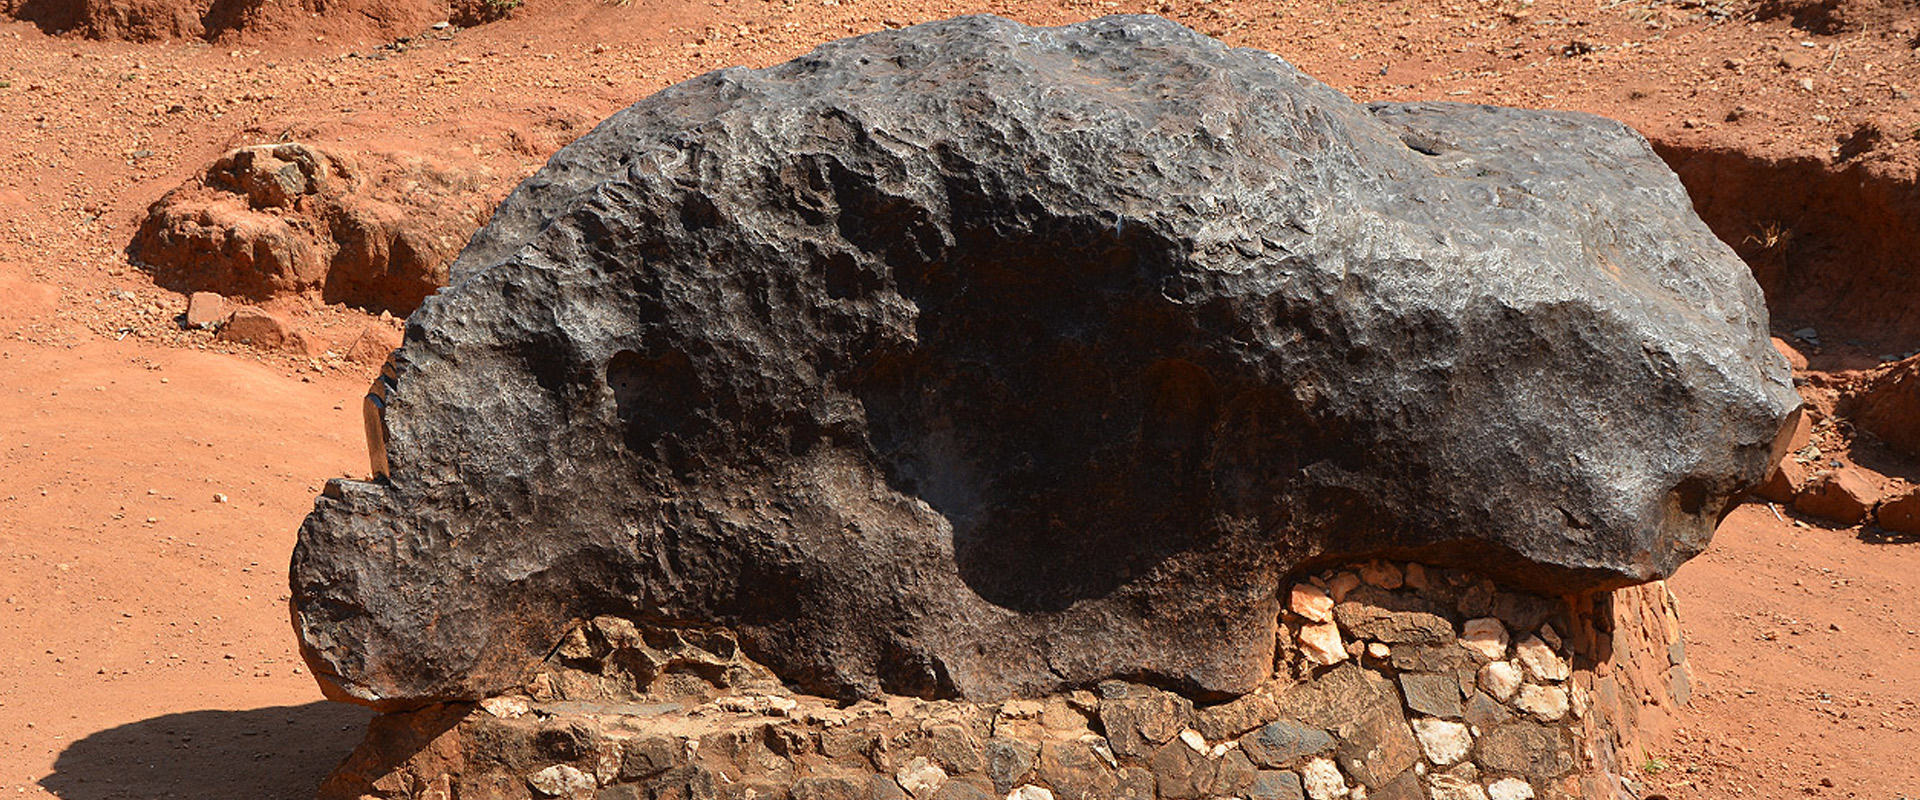 mbozi meteorite